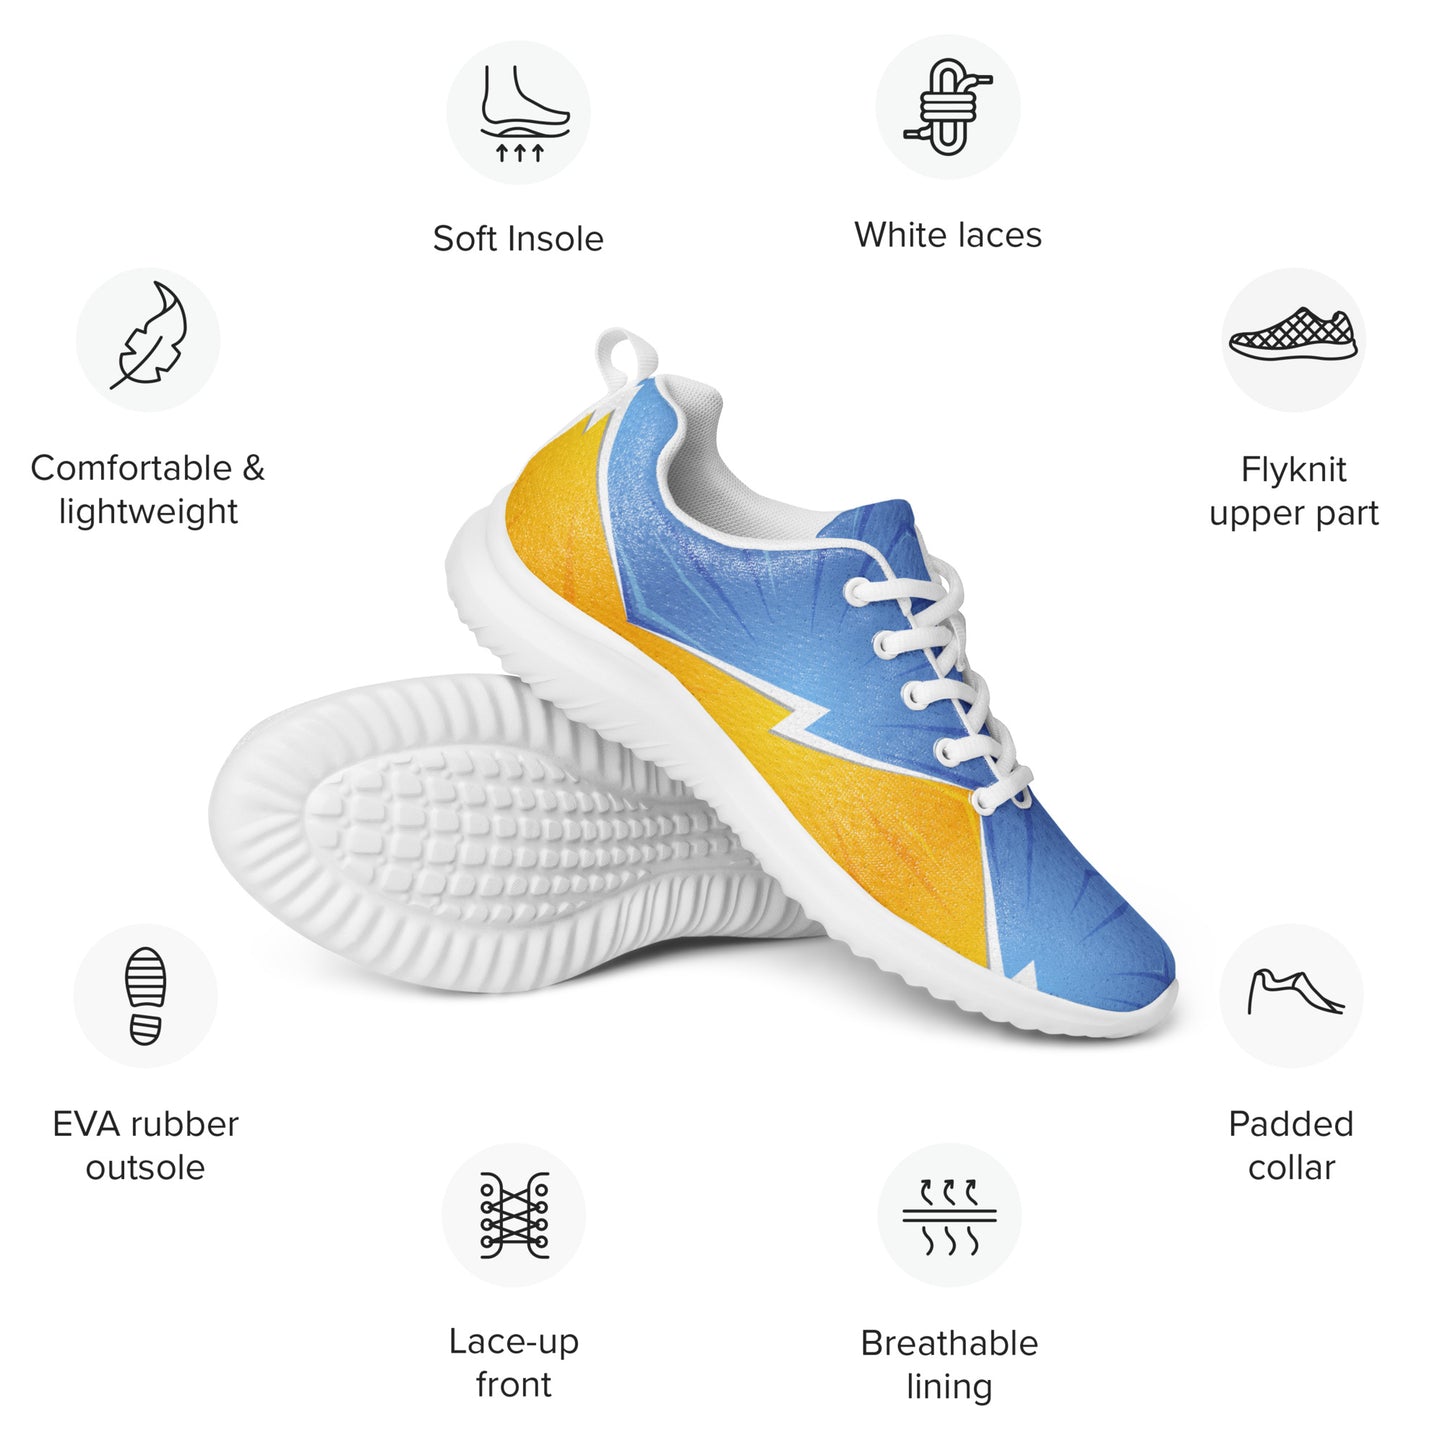 DASH Bolt Men’s Athletic Shoes Lightweight Breathable Design by IOBI Original Apparel